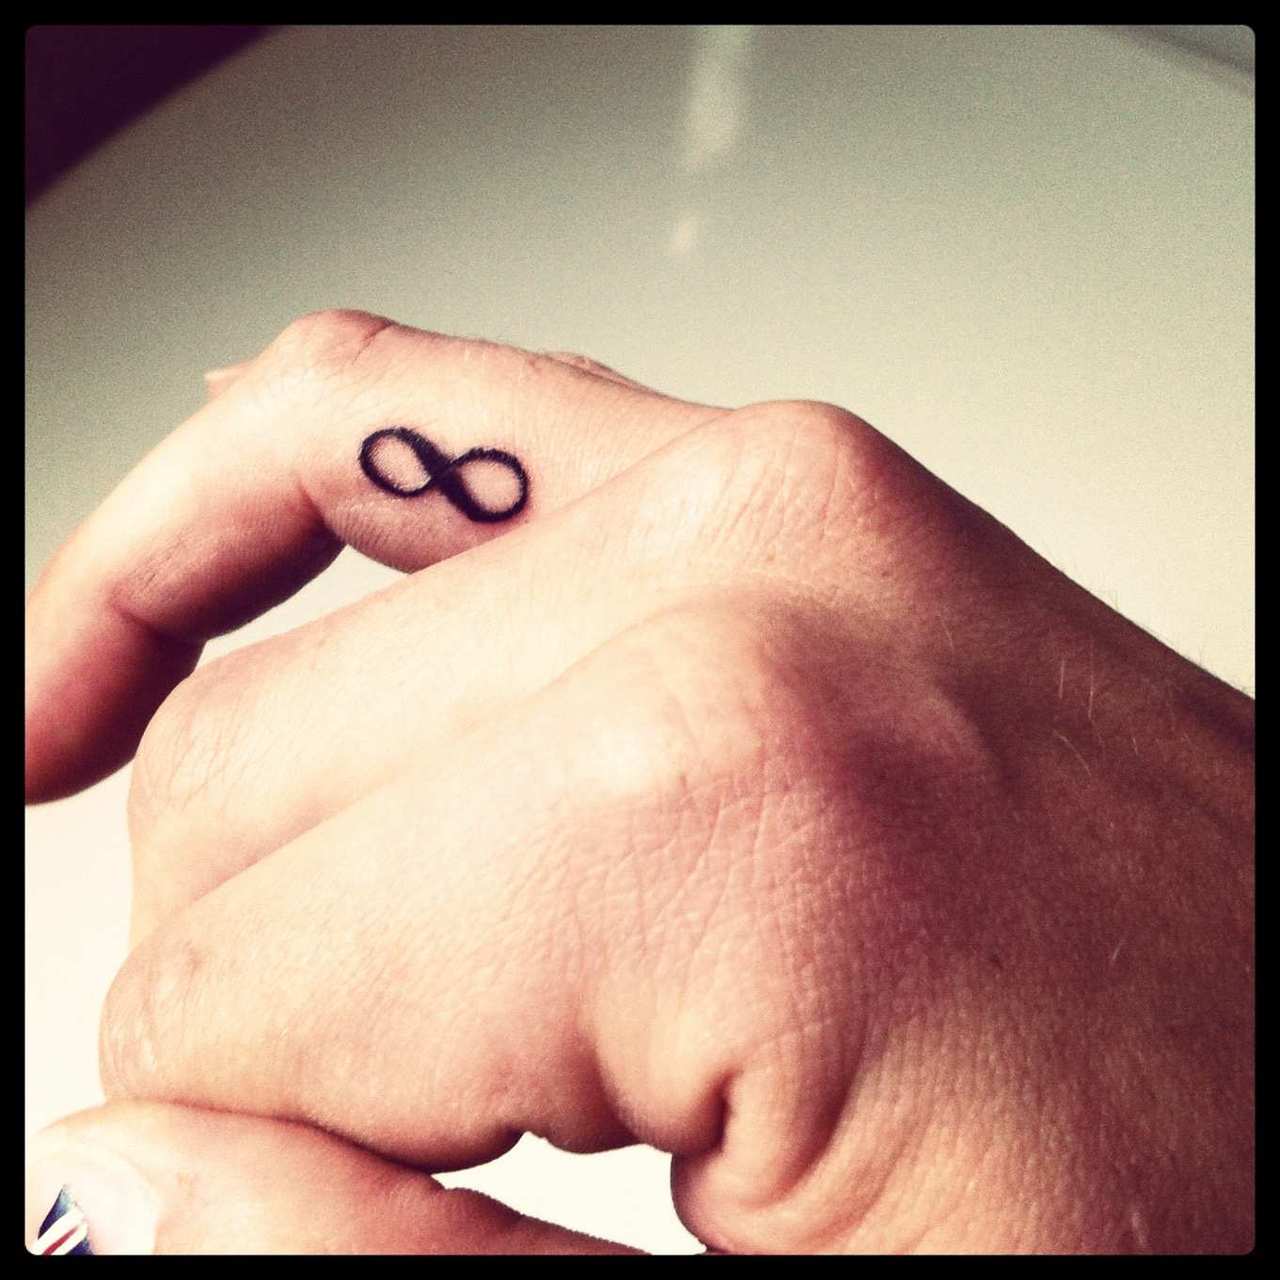 Black Infinity Tattoo On Side Finger